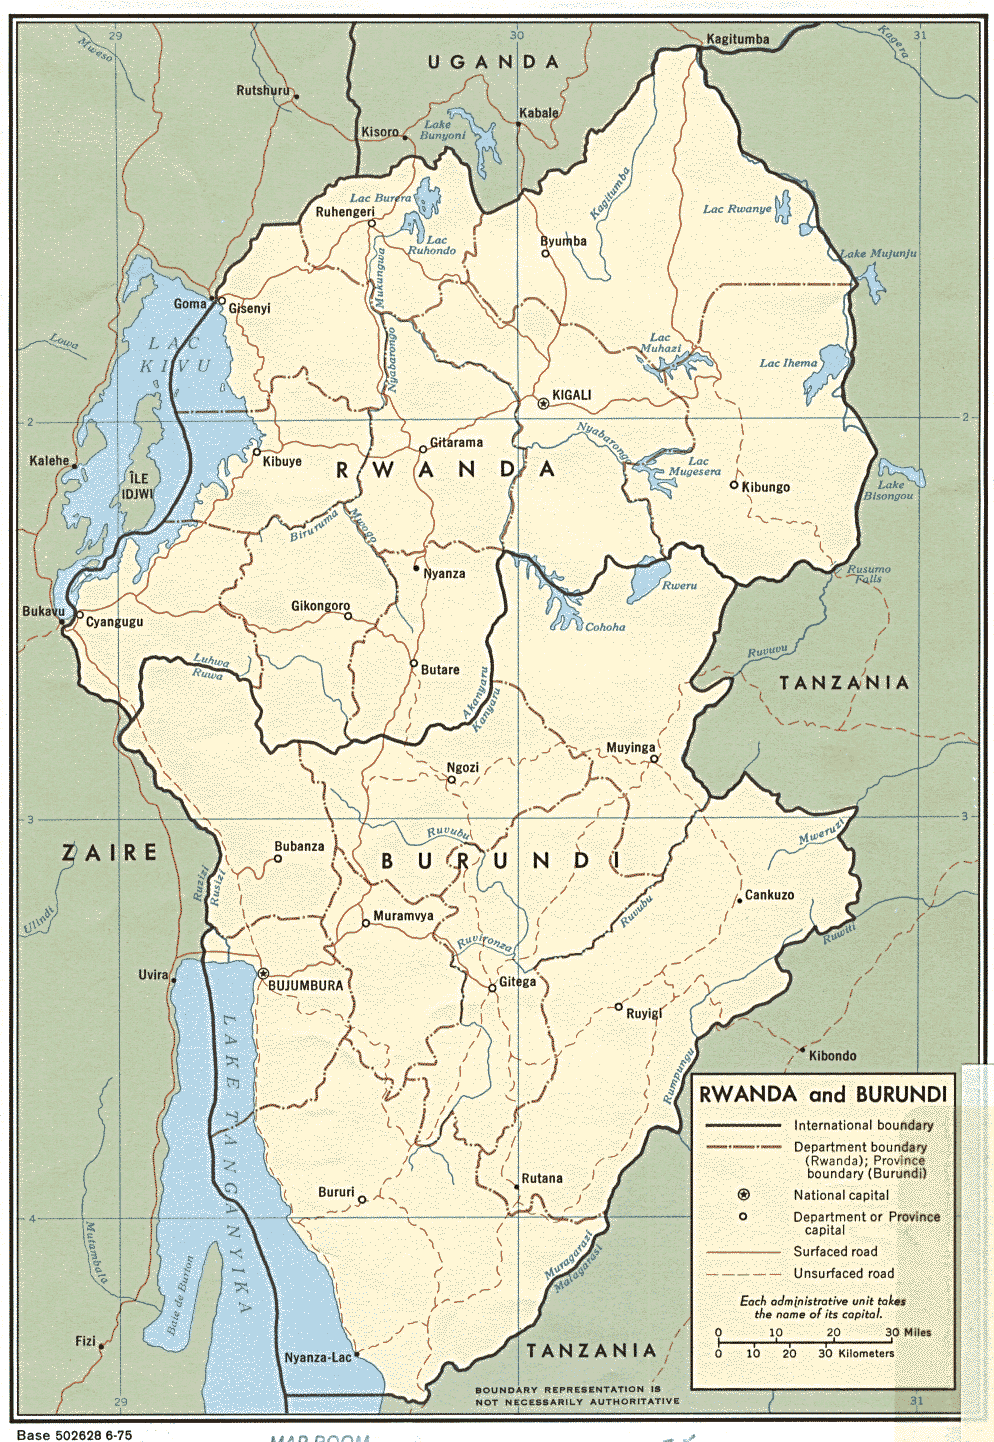 Rwanda and Burundi (Political) 